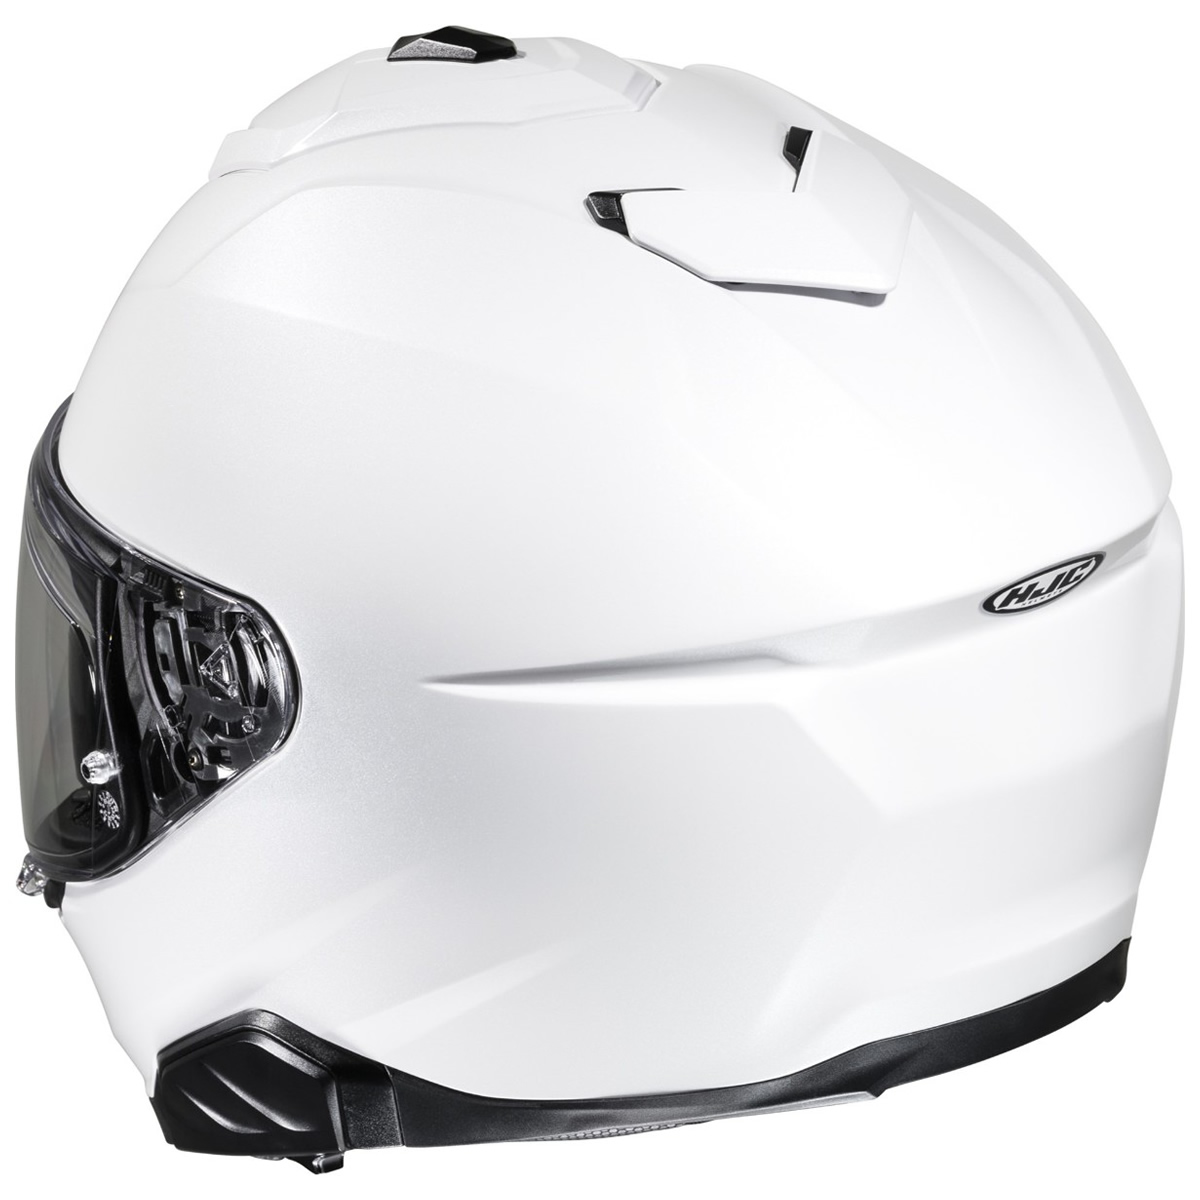 HJC Helm i71 Solid, weiß